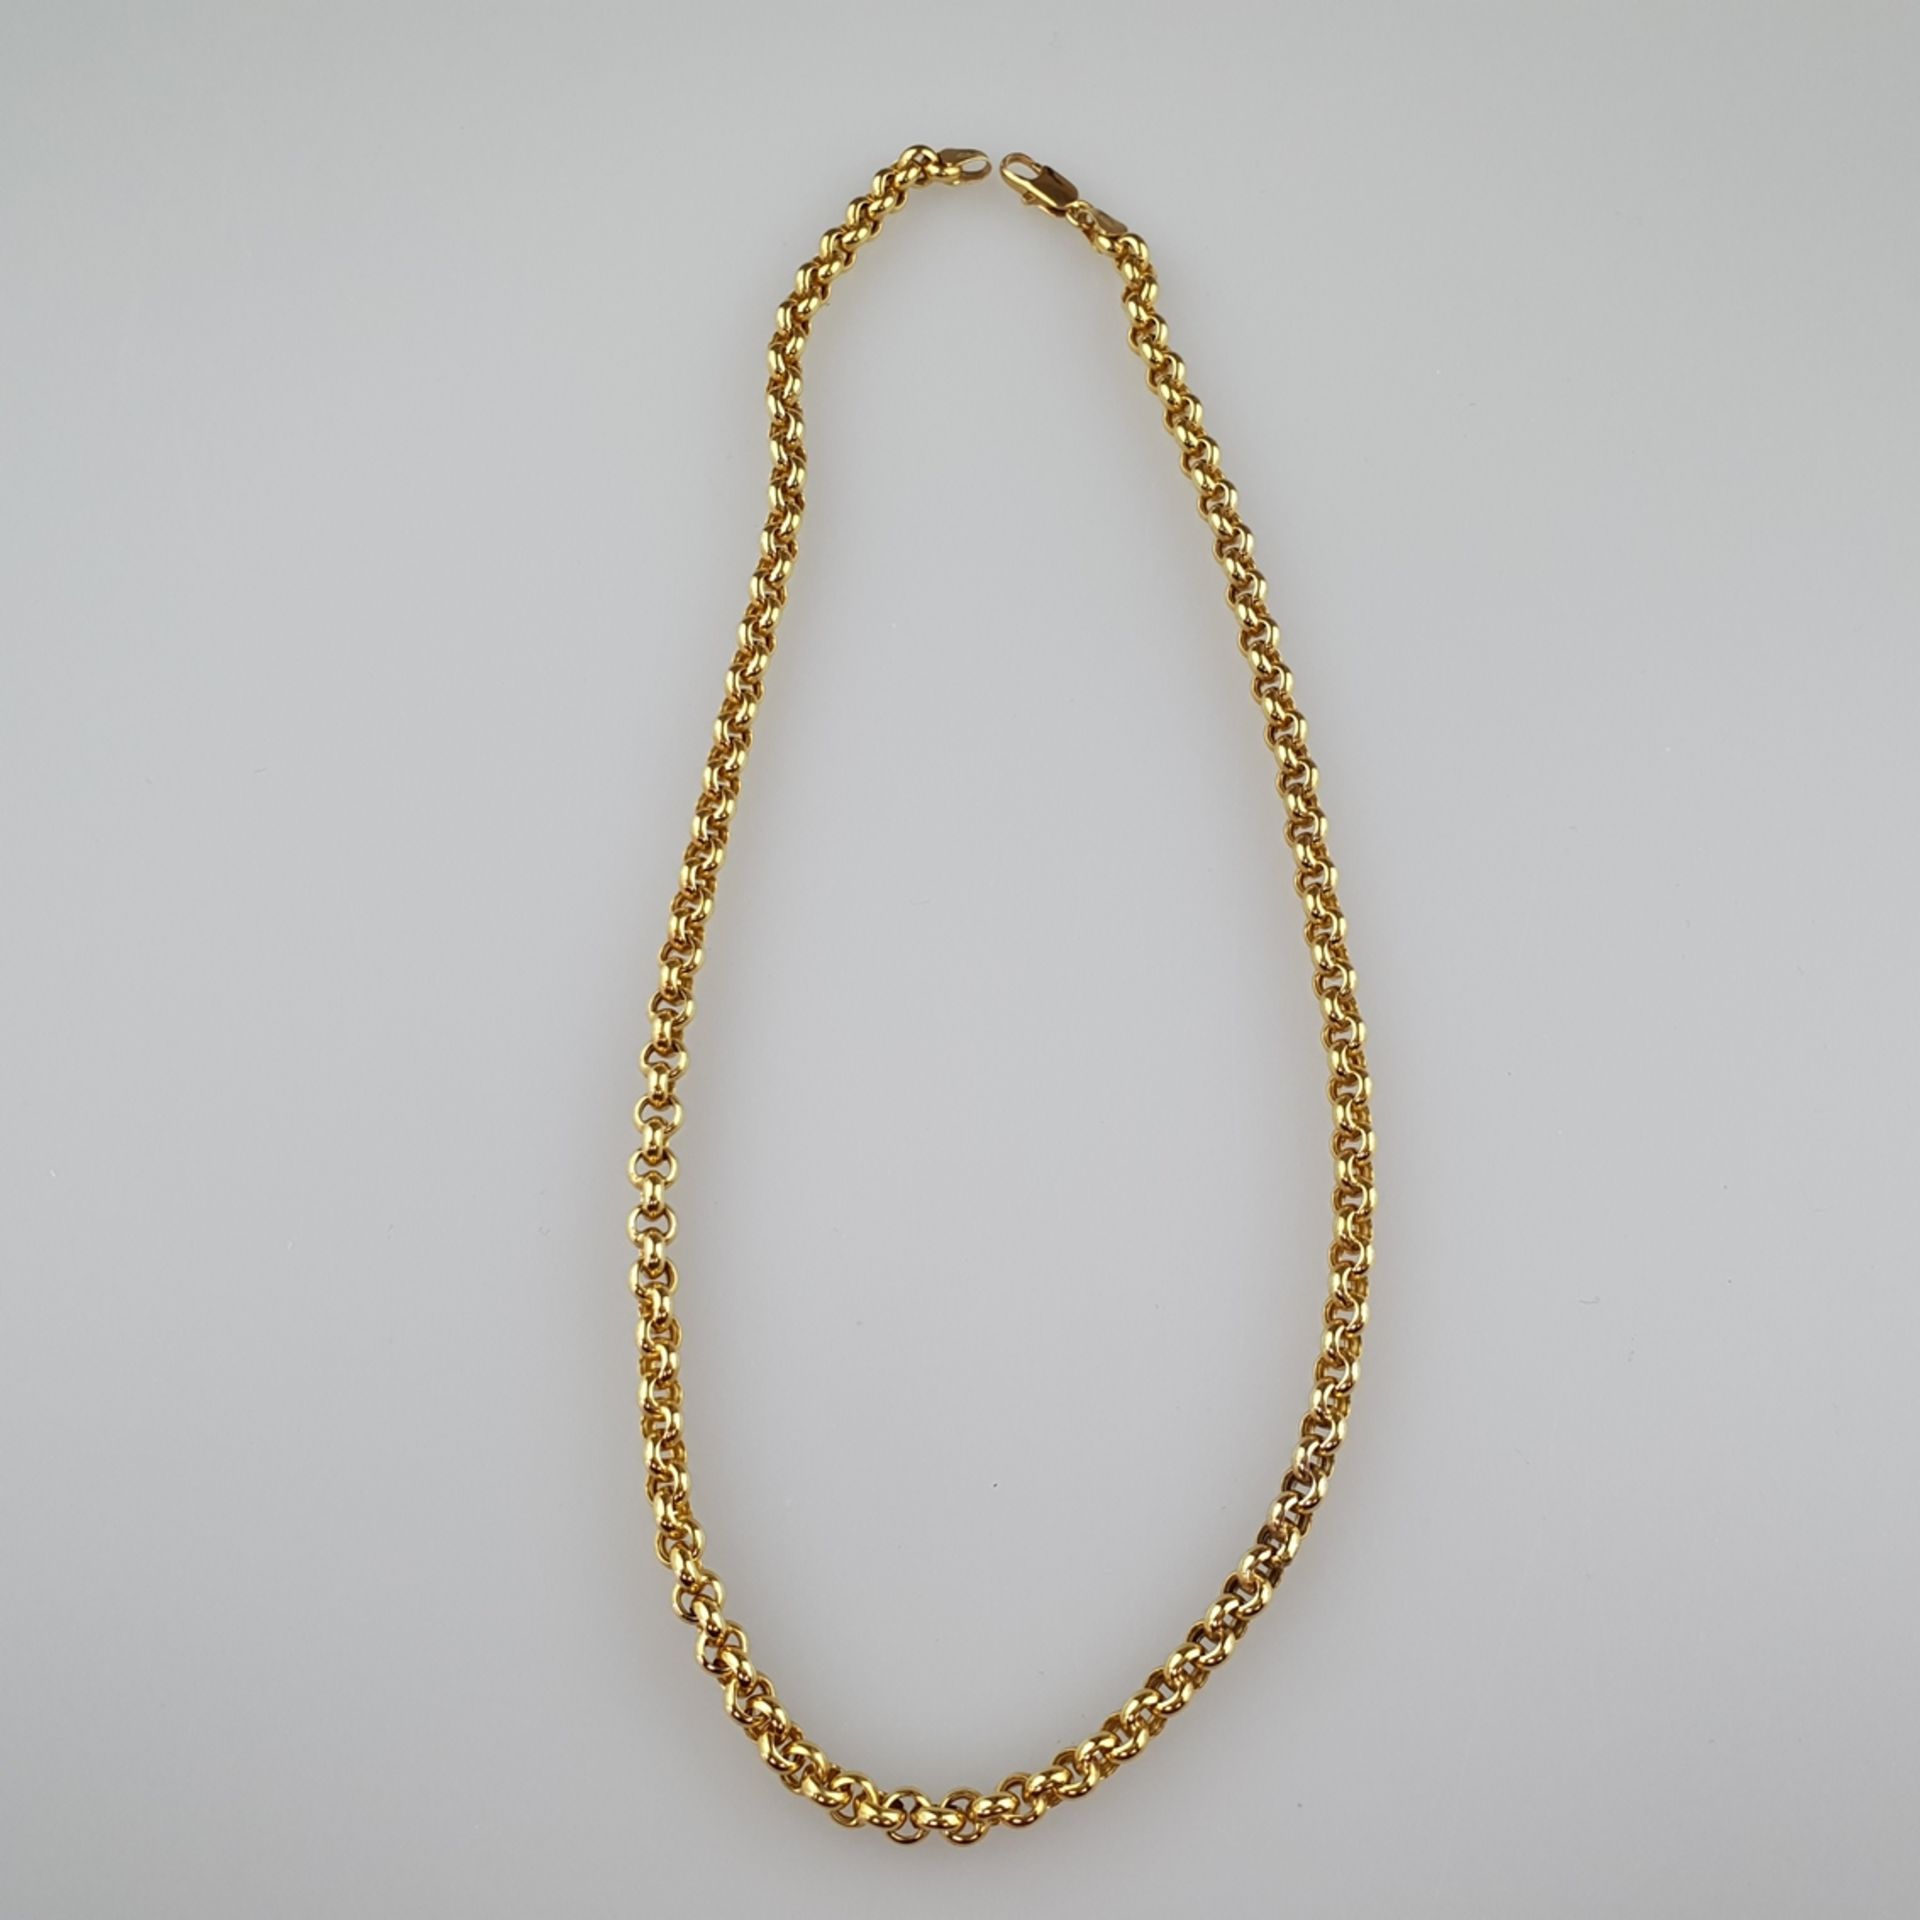 Goldkette - Gelbgold 333/000, kurze Kette aus ringförmigen Gliedern, ca. 43cm lang, ca. 13,1 g